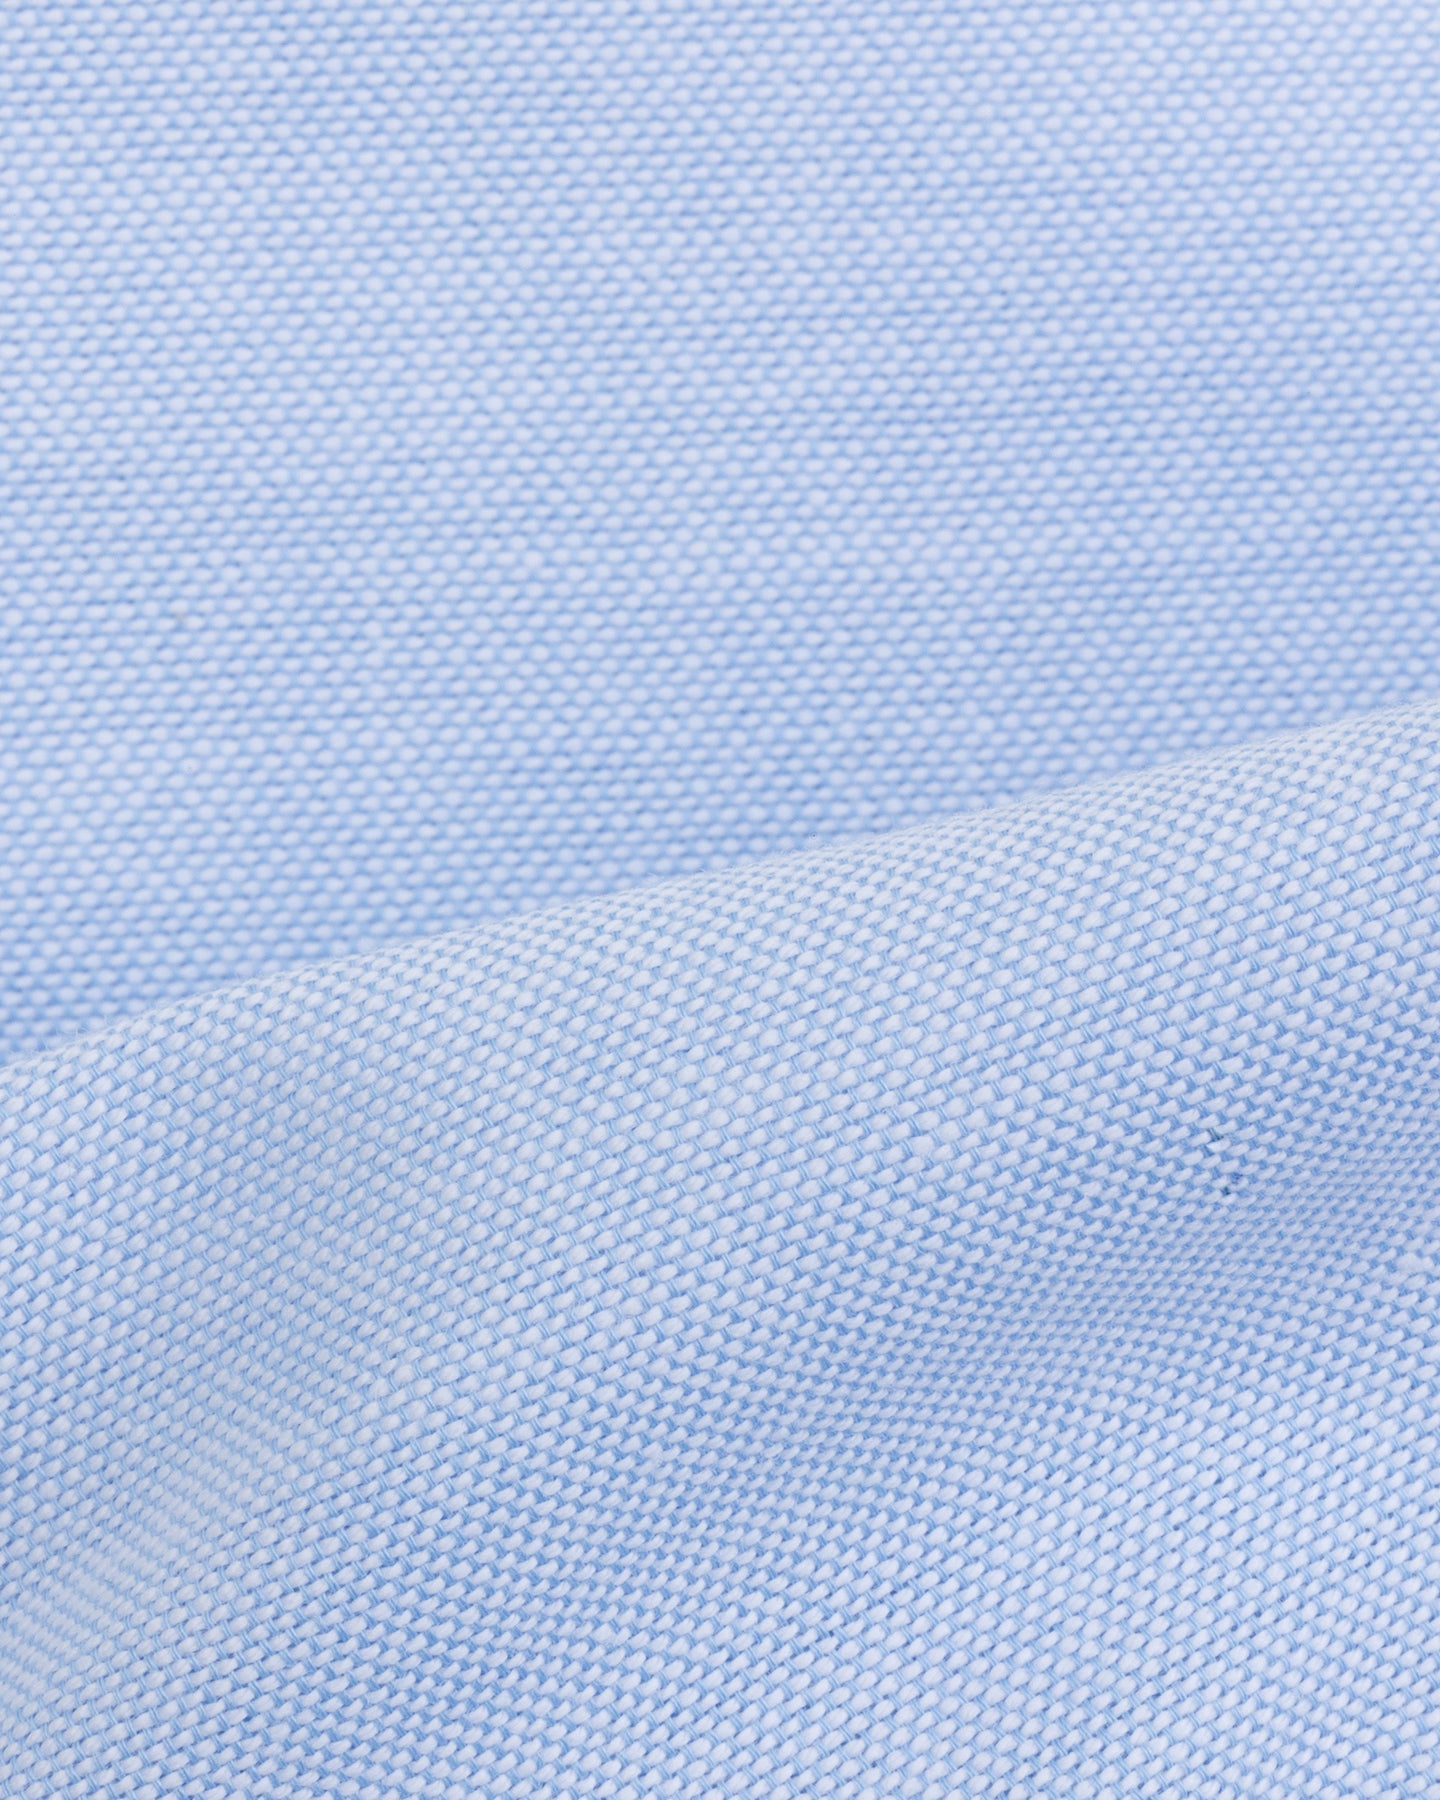 Light blue oxford cloth shirt fabric